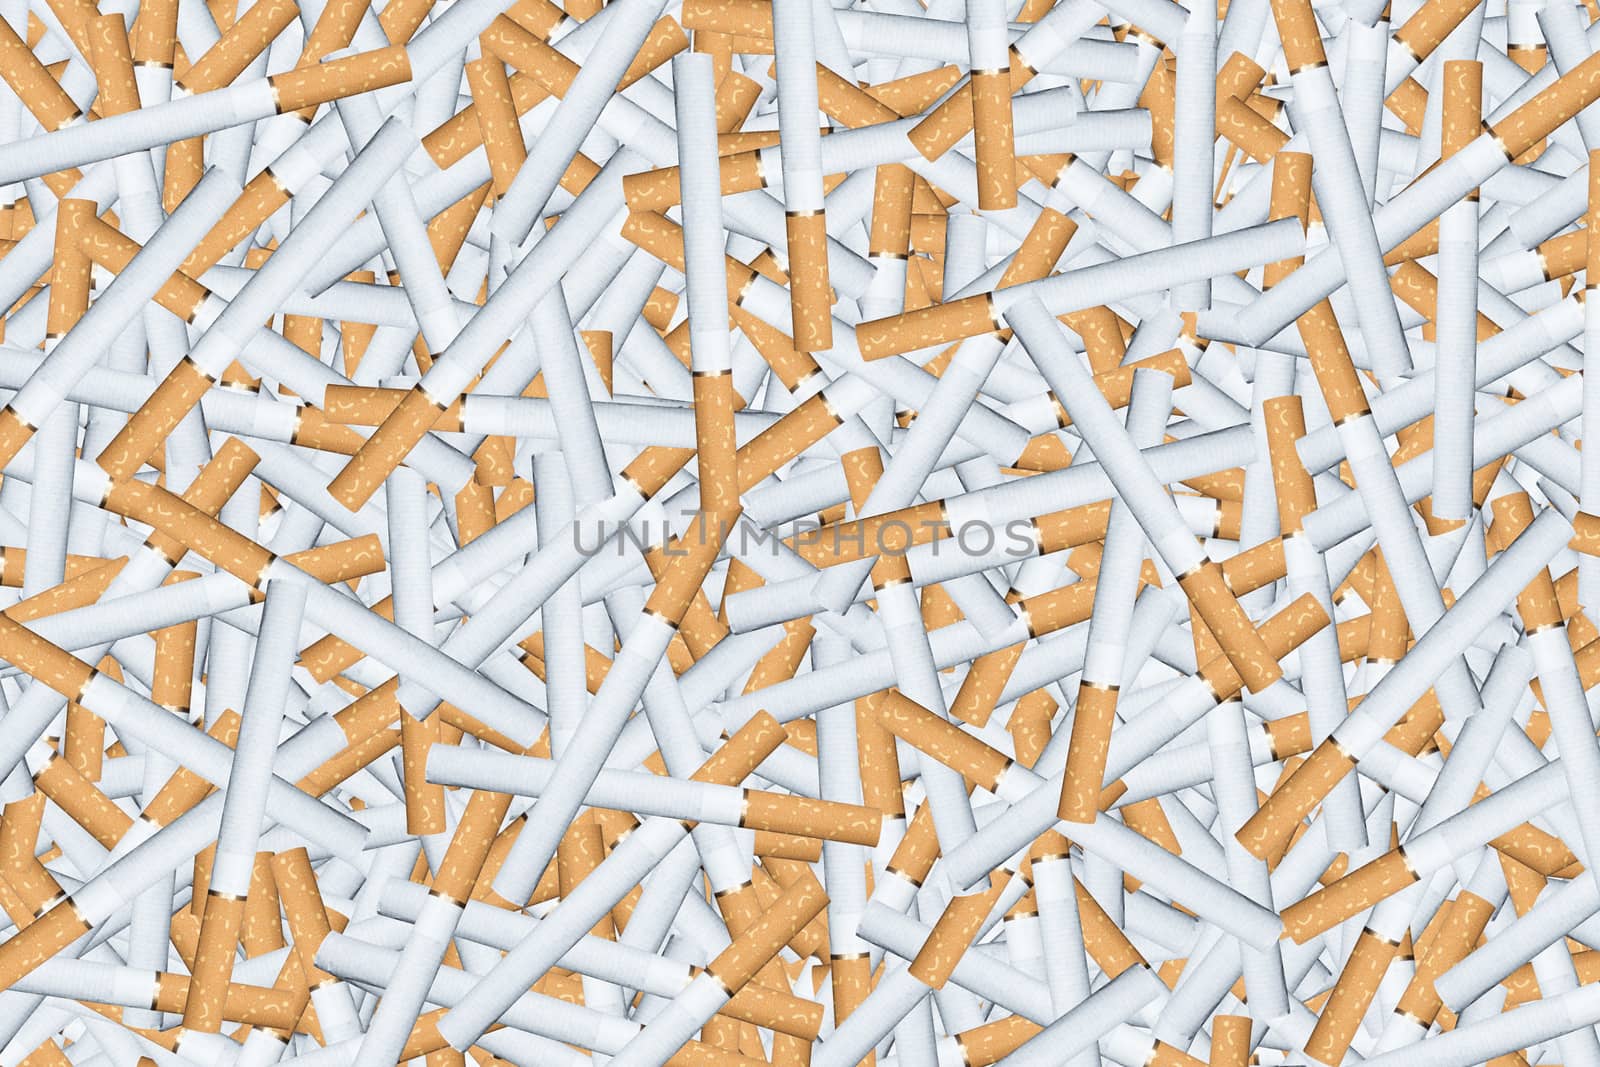 Cigarettes by begun1983